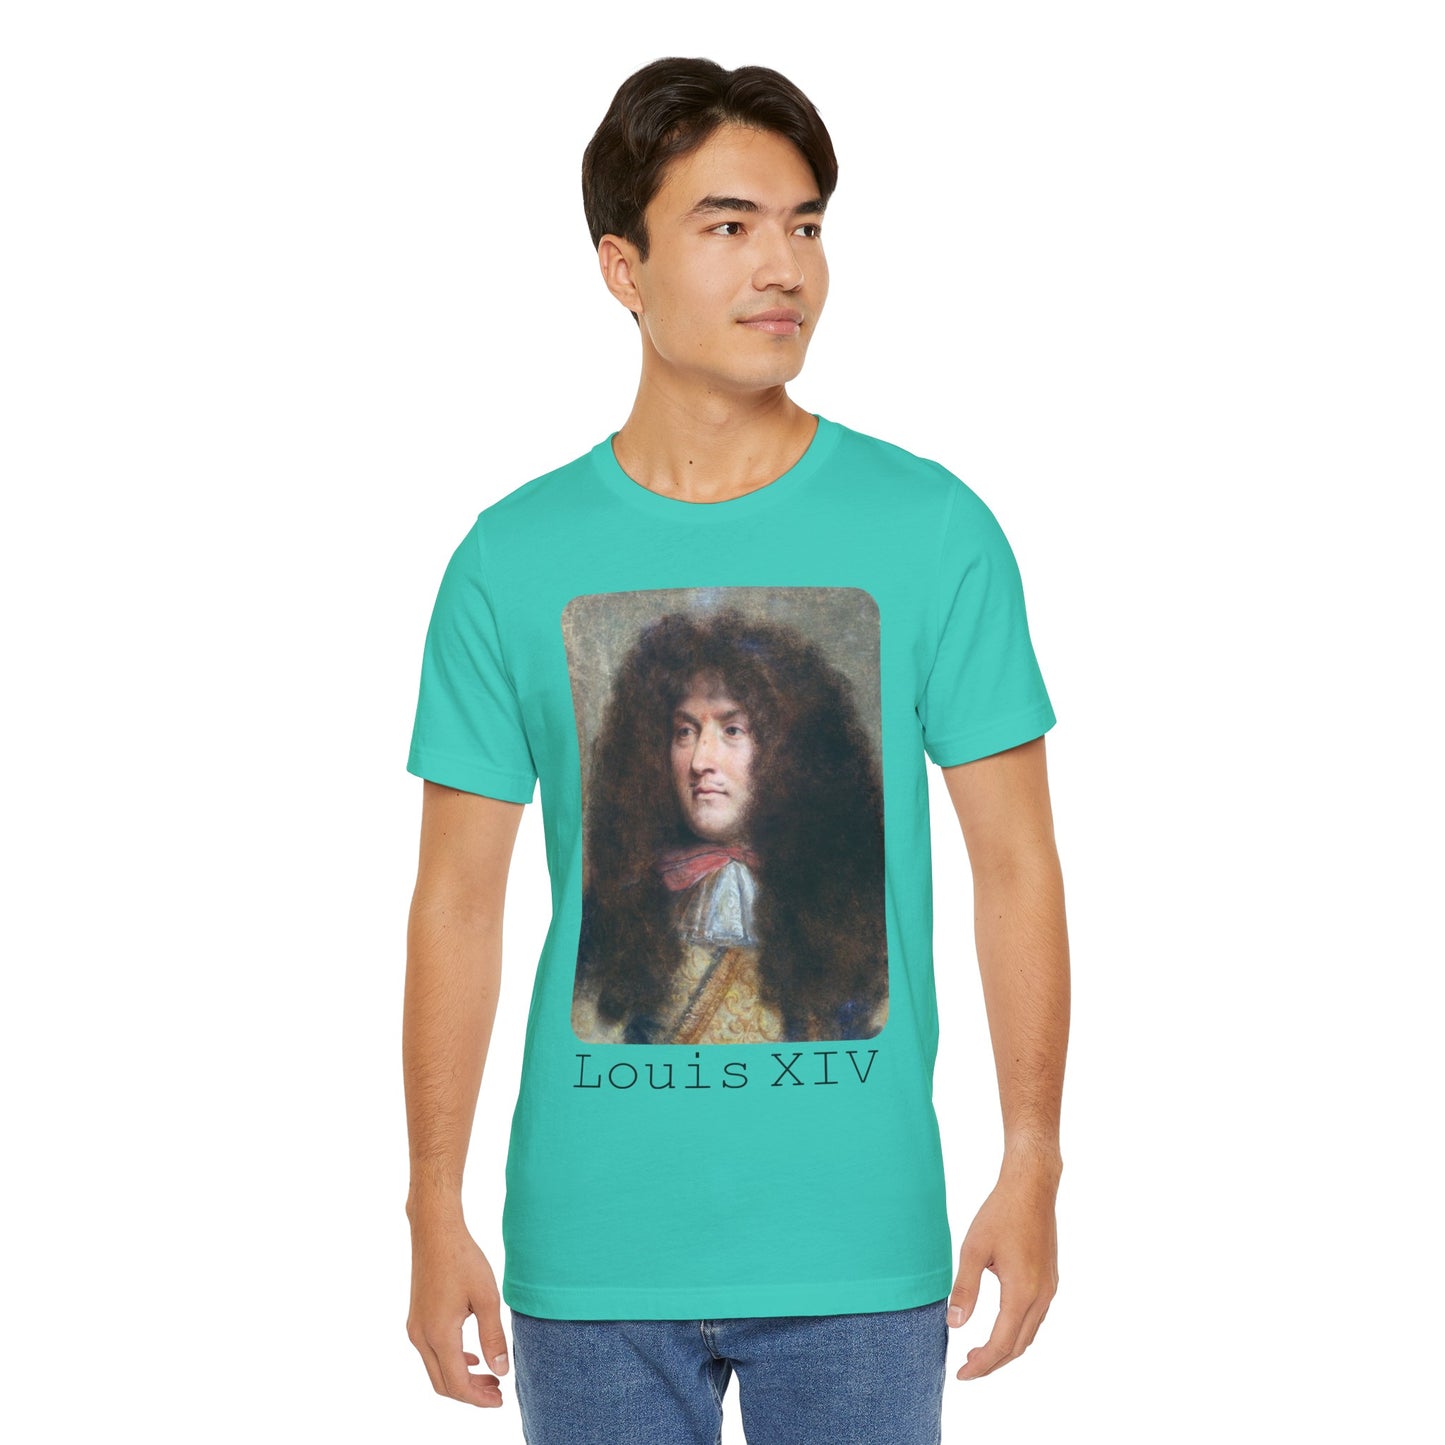 Louis XIV - Hemmingway Line - Hurts Shirts Collection